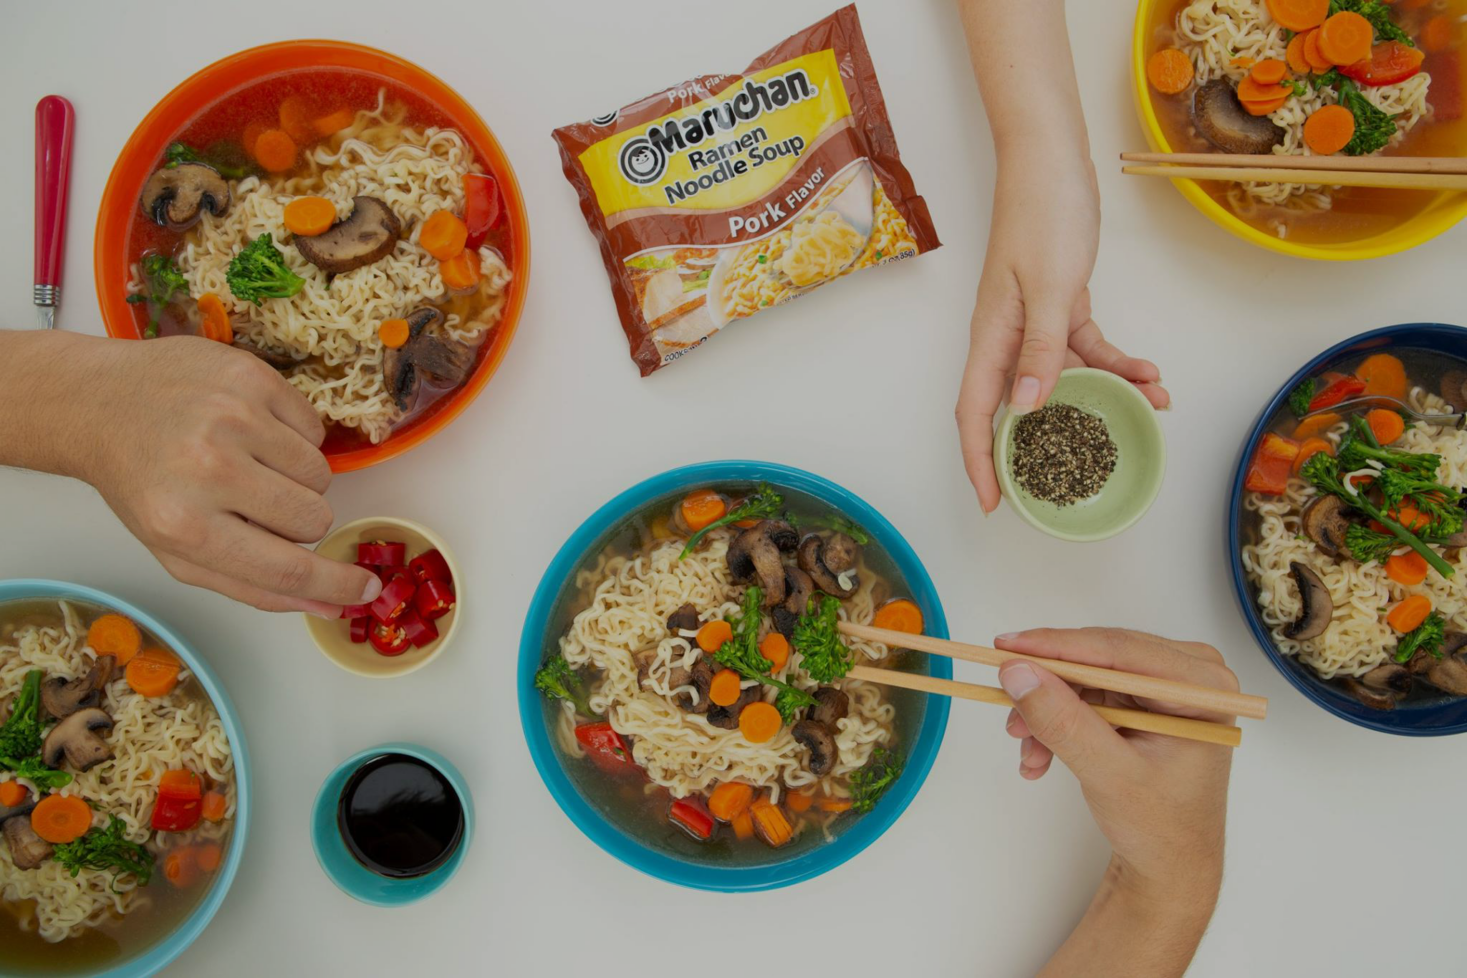 Hands preparing and serving instant ramen noodles with vegetables and pork flavor packet visible